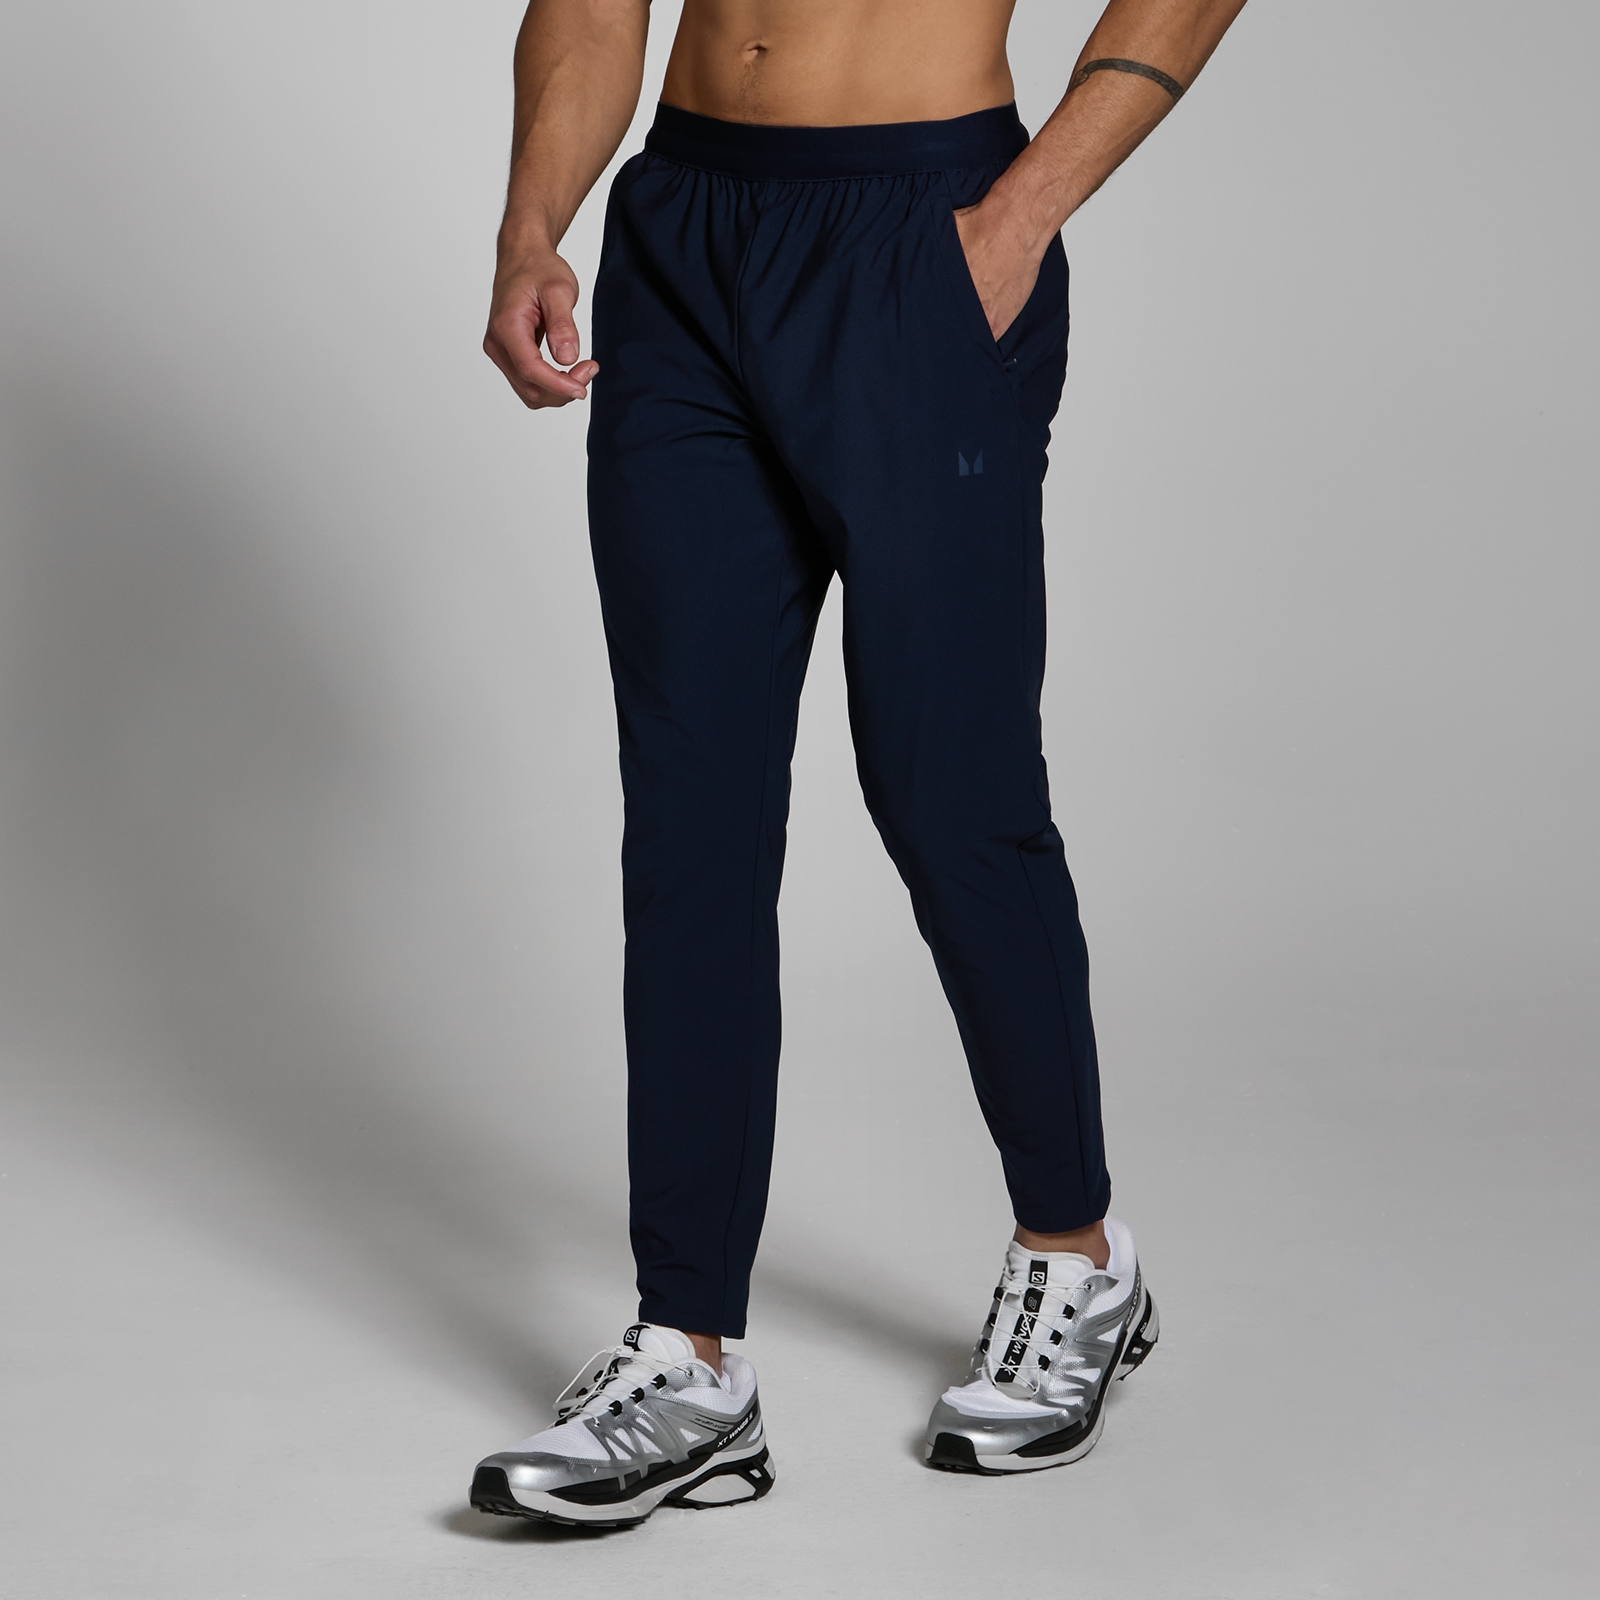 Image of Pantaloni da jogging in tessuto MP Lifestyle da uomo - Blu navy scuro - XXL